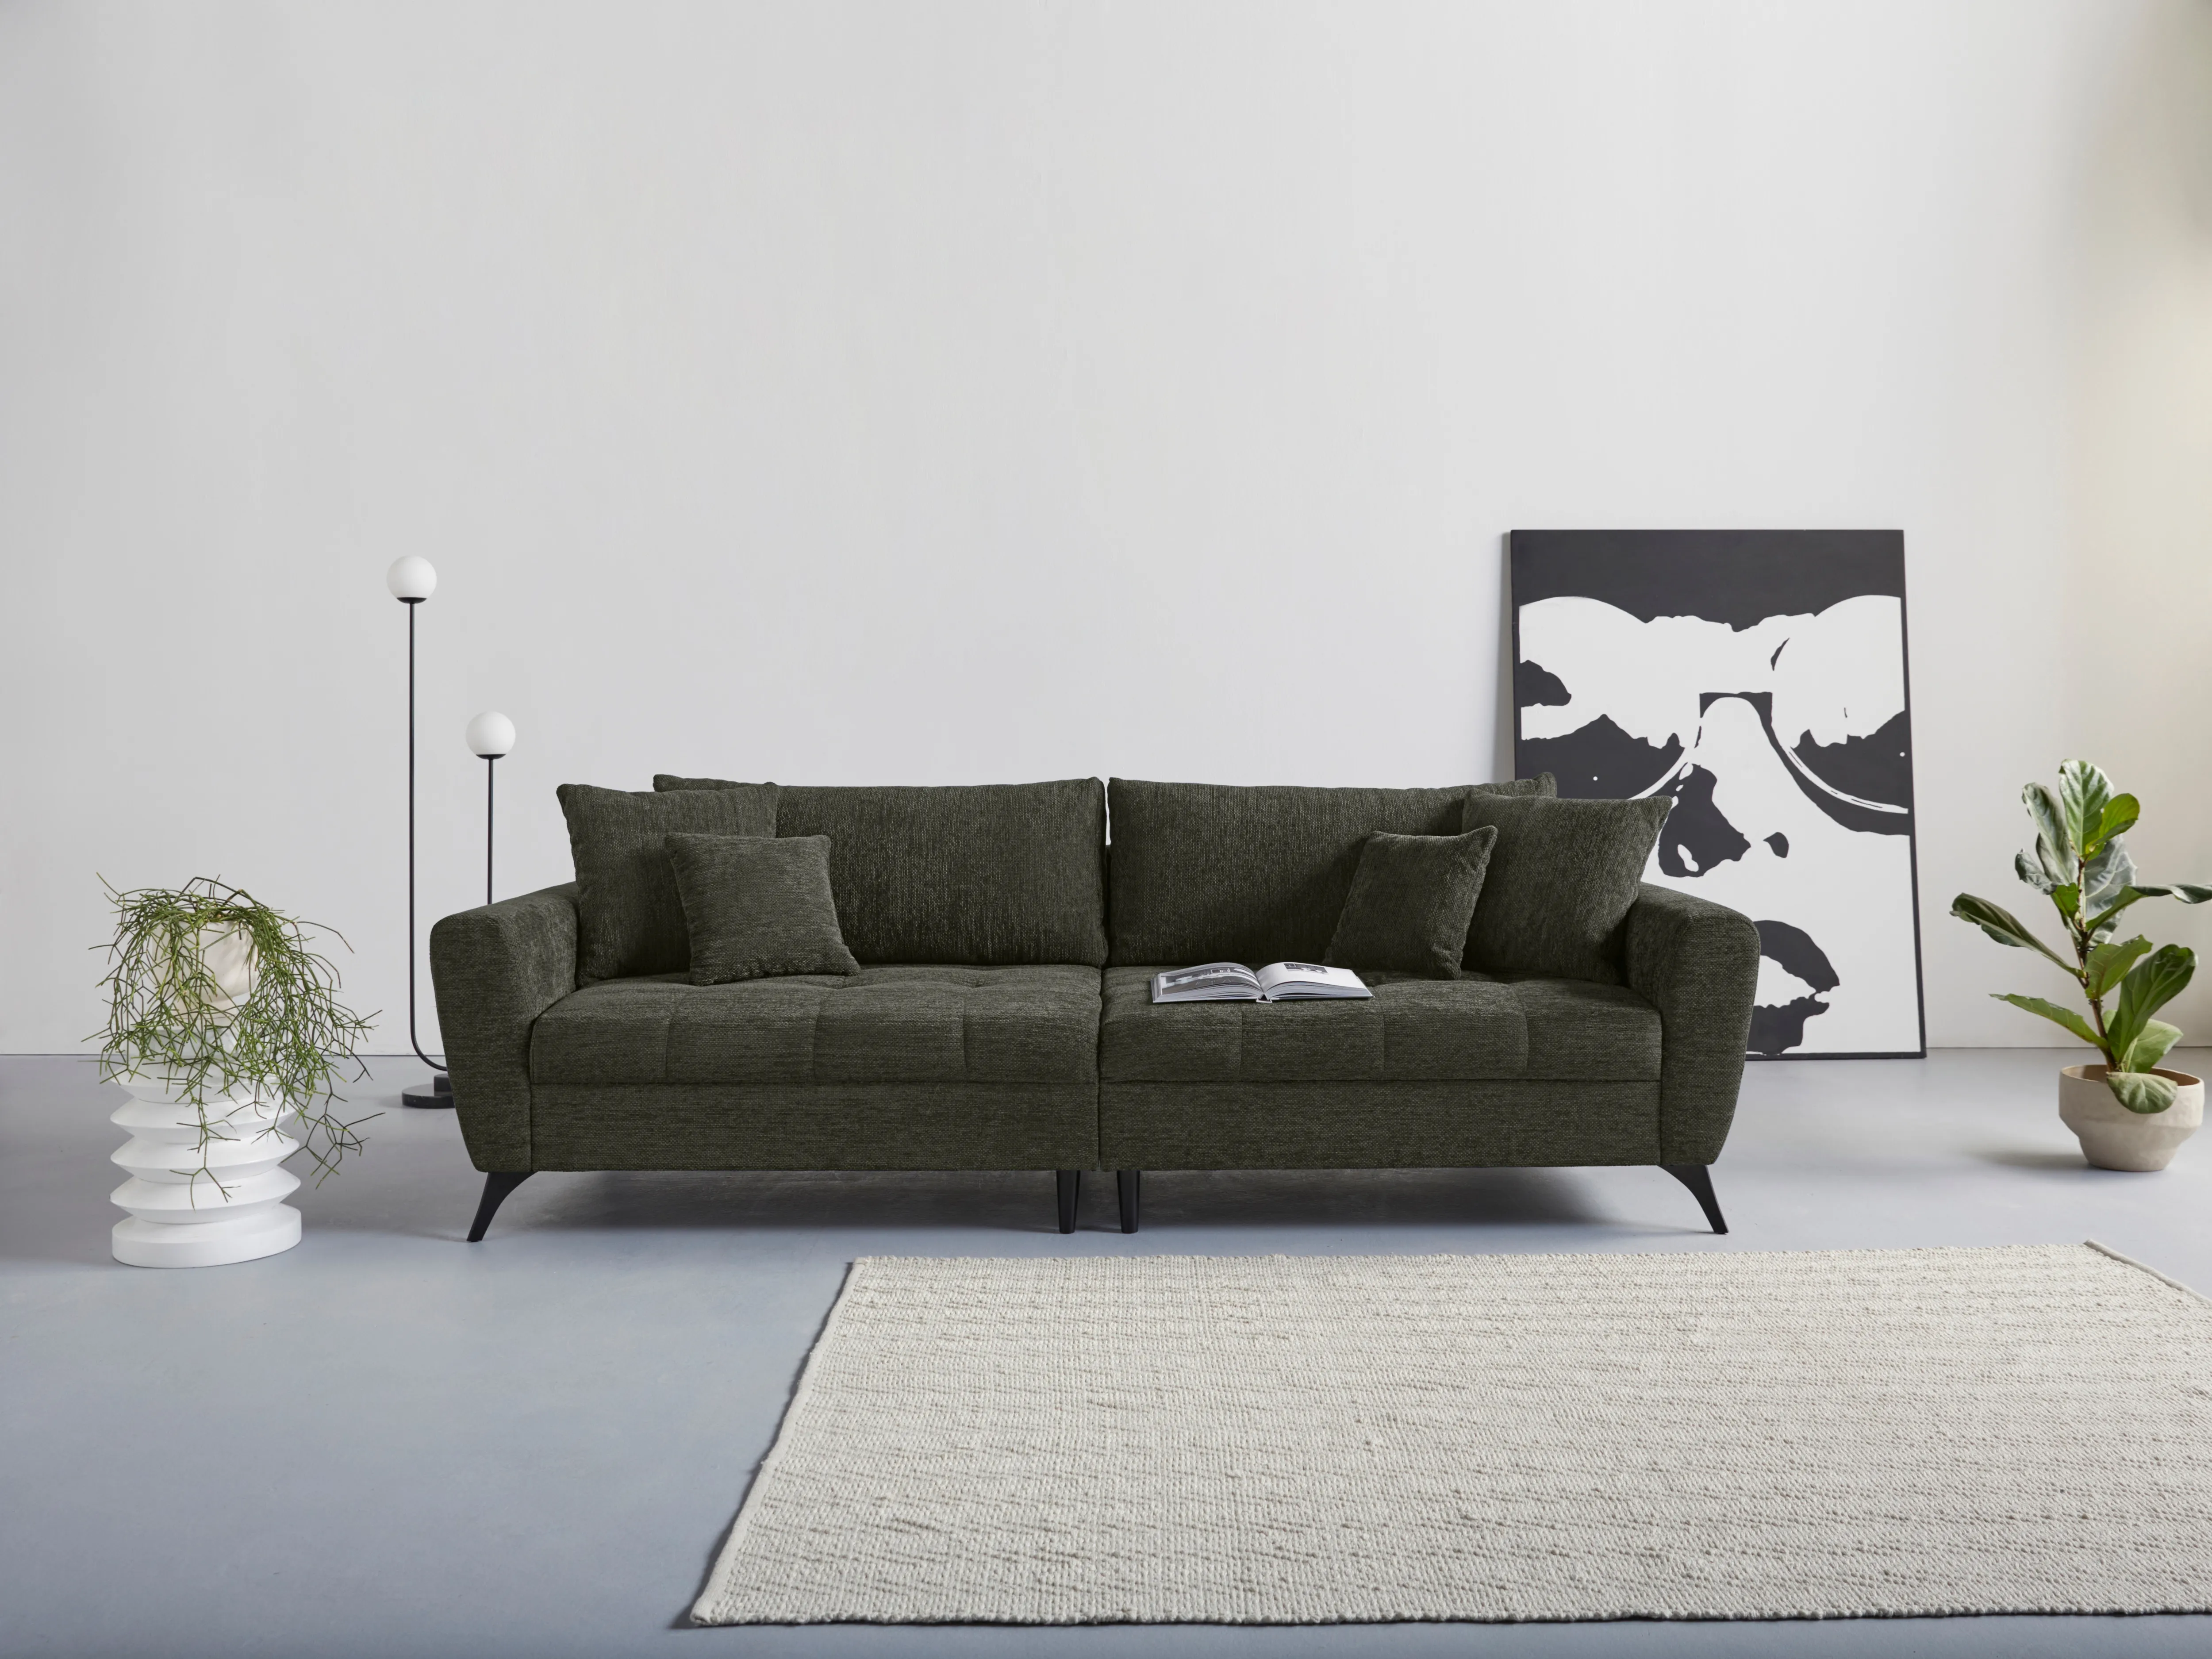 Big-Sofa INOSIGN "Lörby" Sofas Gr. B/H/T: 264 cm x 90 cm x 107 cm, Struktur weich, Struktur weich, grün XXL Sofas auch mit Aqua clean-Bezug, feine Steppung im Sitzbereich, lose Kissen